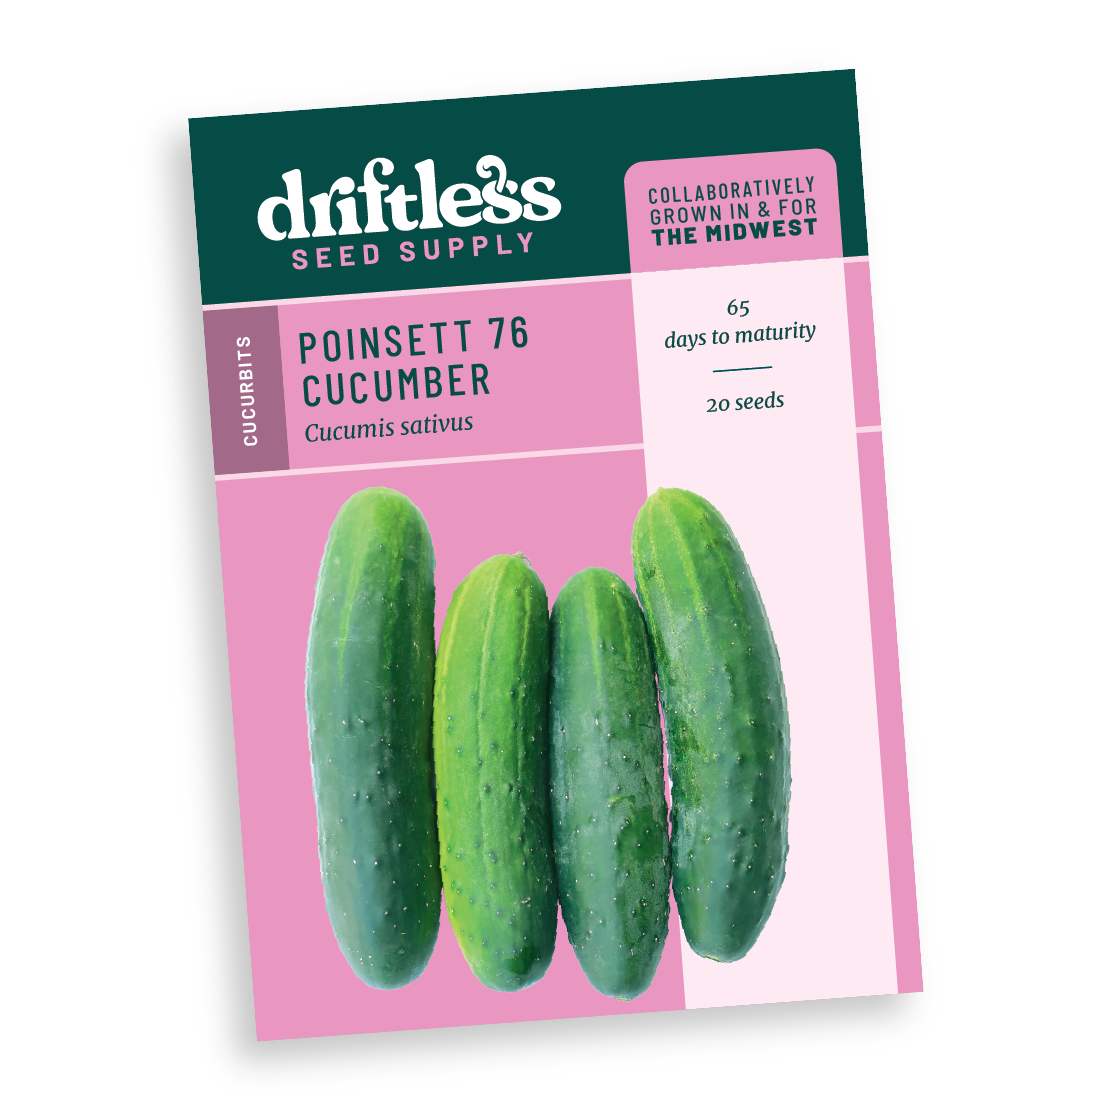 Poinsett 76 Heirloom Disease Resistant Slicer Cucumber